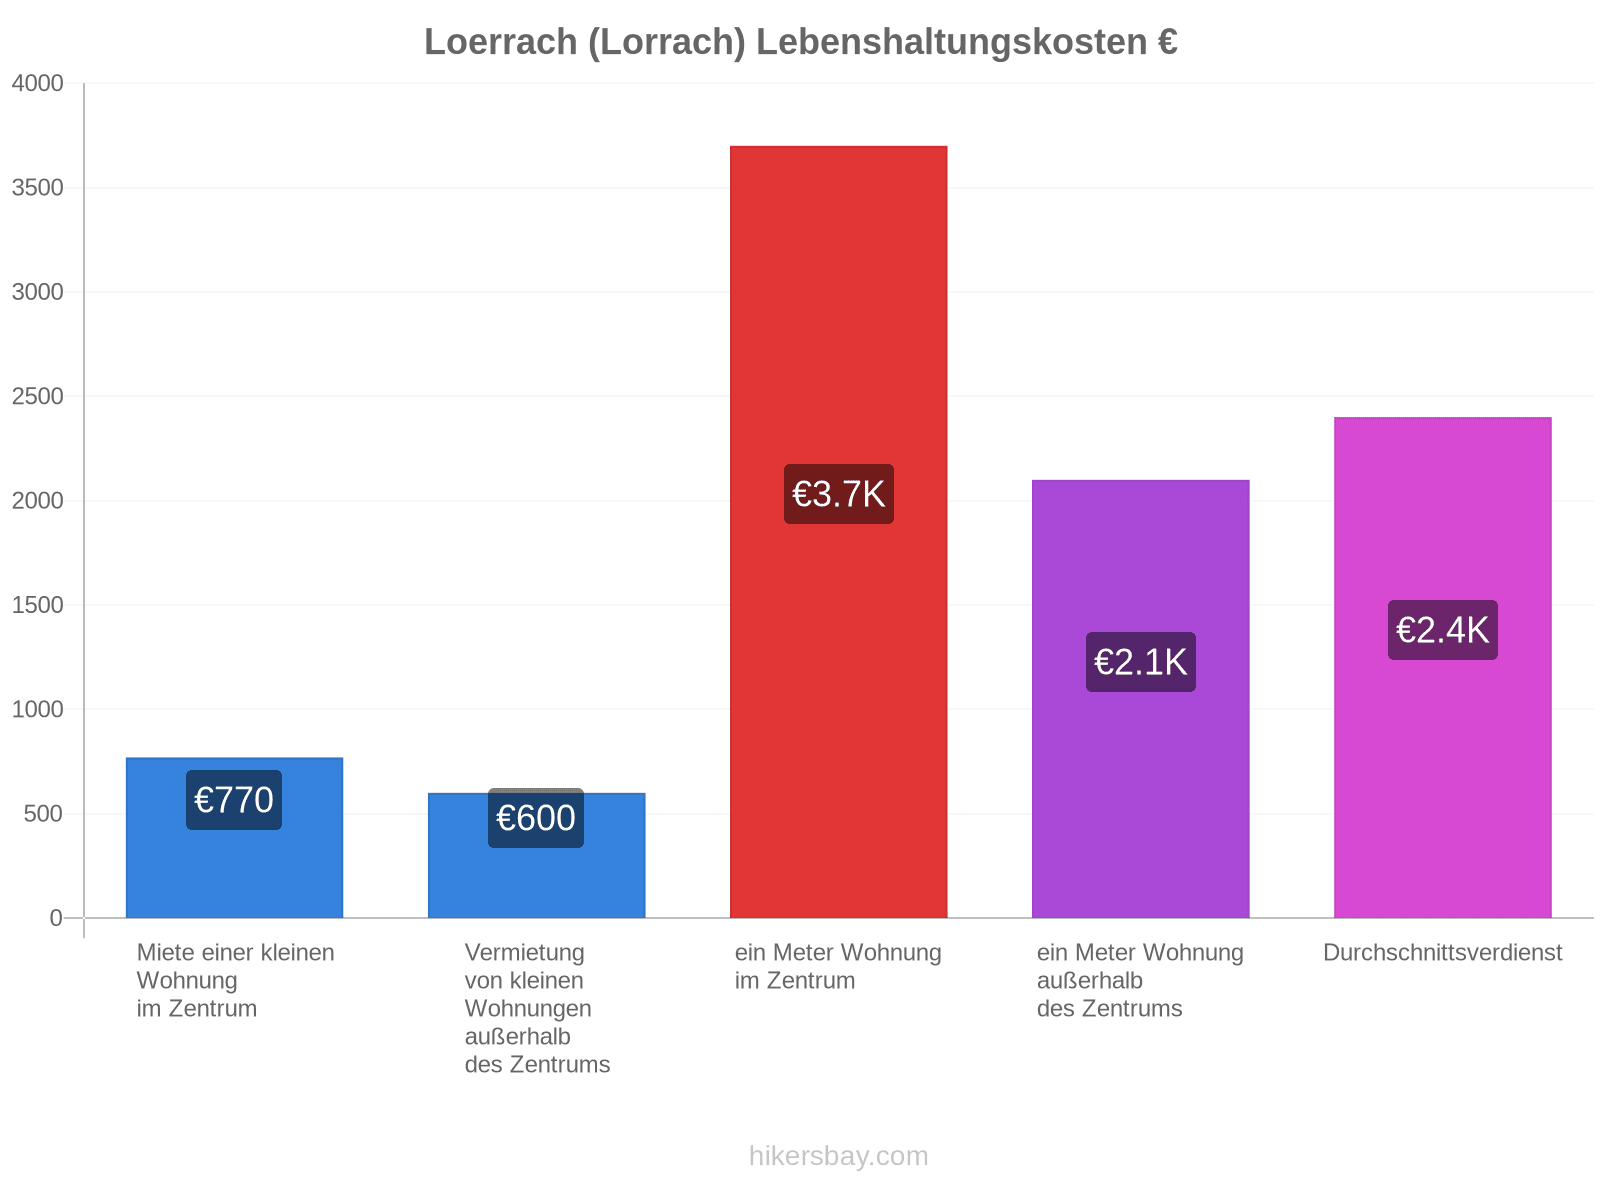 Loerrach (Lorrach) Lebenshaltungskosten hikersbay.com